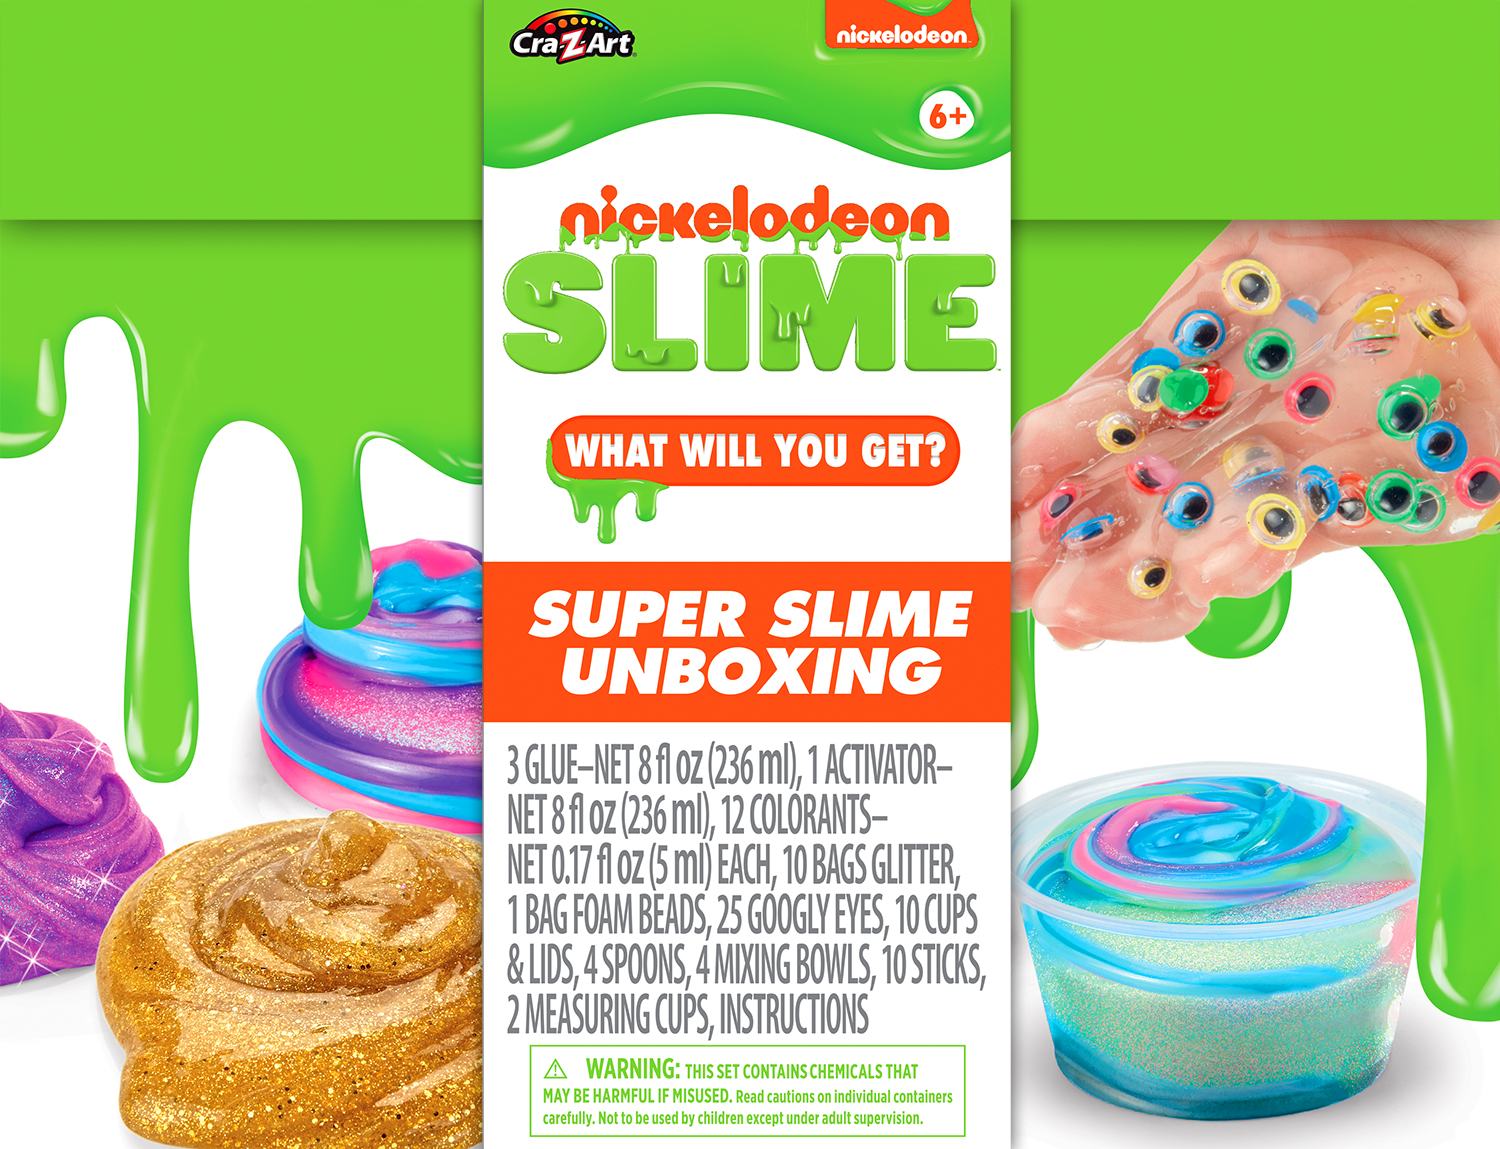 Cra-Z-Art Nickelodeon Slime Super Slime Unboxing Kit - image 3 of 12